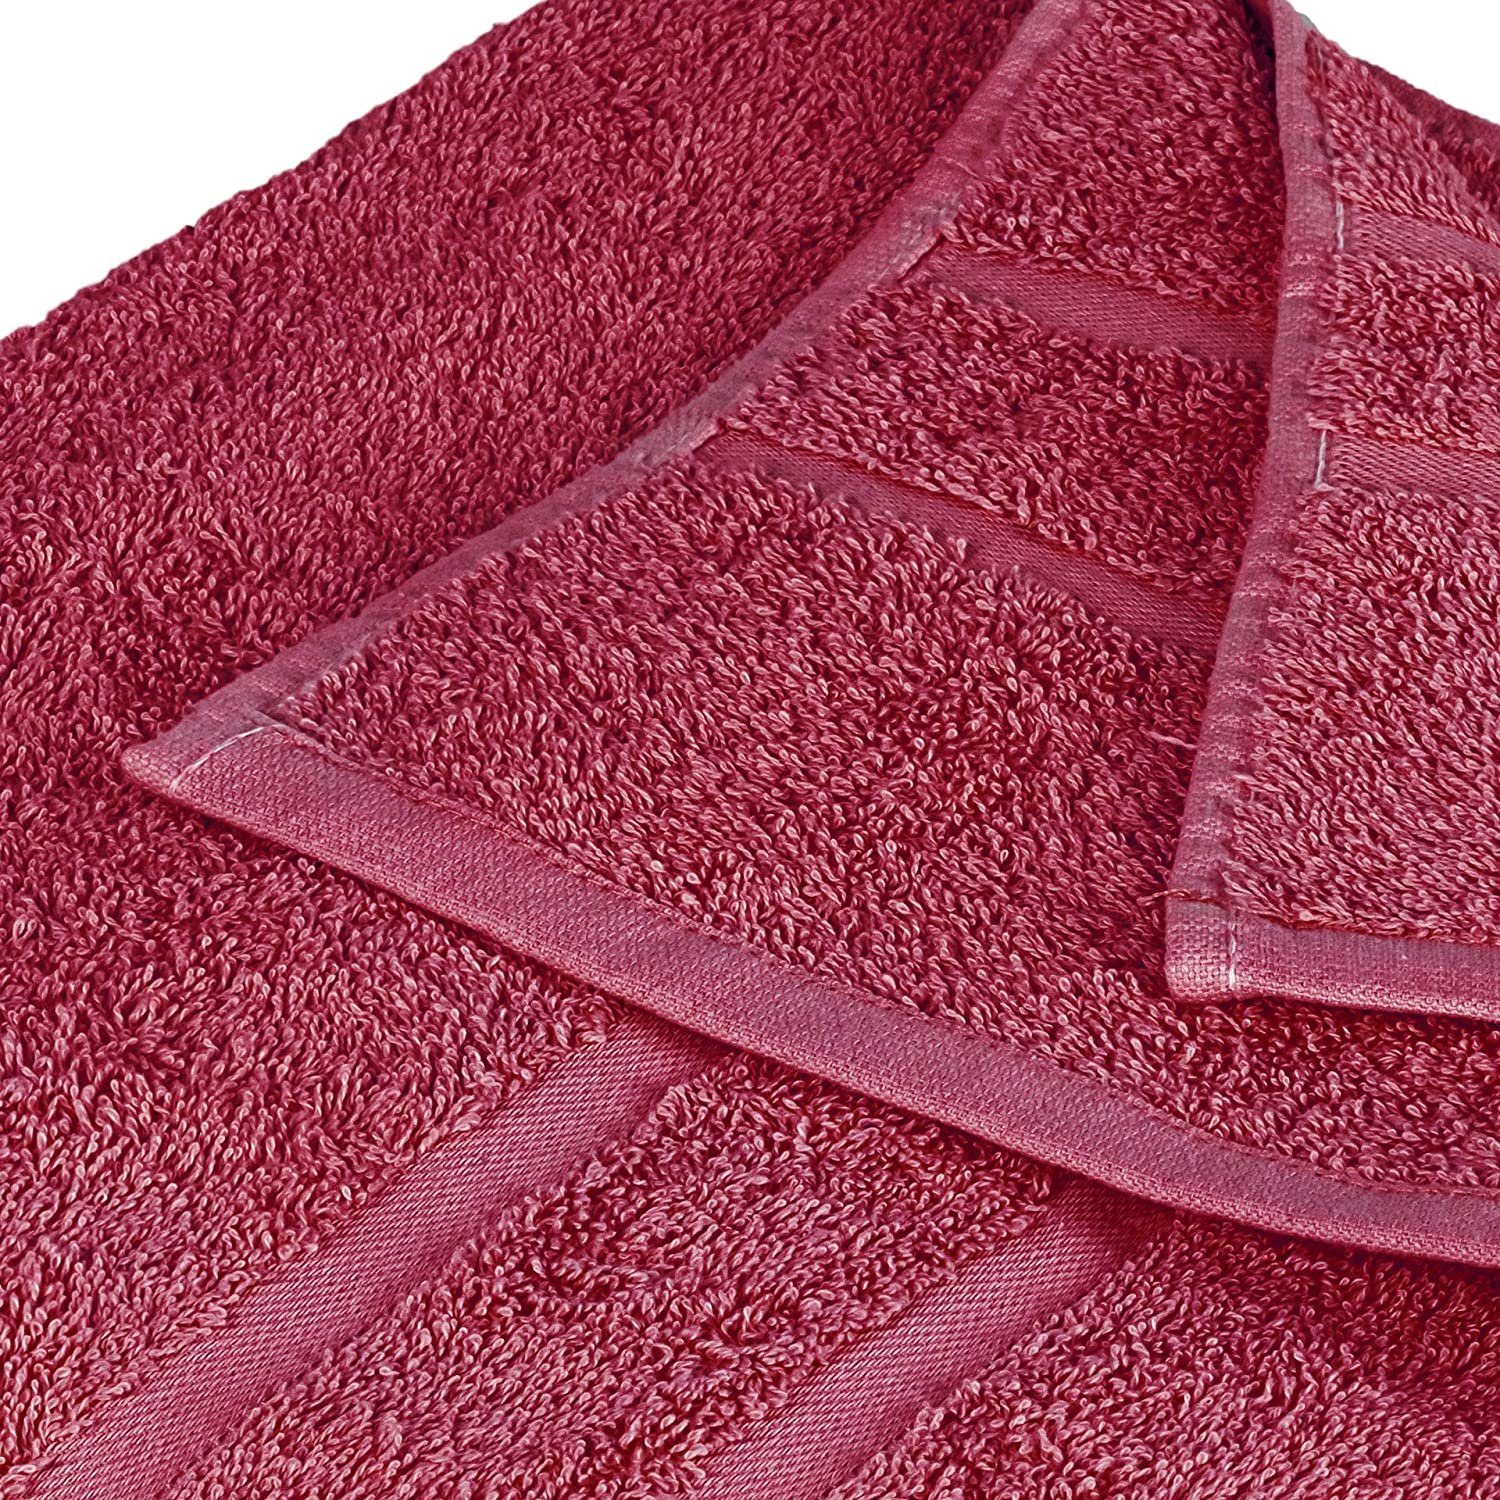 StickandShine Handtuch Set 2x 2x 12er Baumwolle Bordeaux Baumwolle Saunatücher Handschuh Frottee Handtuch 2x 2x 2x Gästehandtuch verschiedenen Badetücher als GSM SET 100% 2x (Spar-set), Handtücher 500 in GSM Duschtücher 500 (12Teilig) 100% Farben Pack